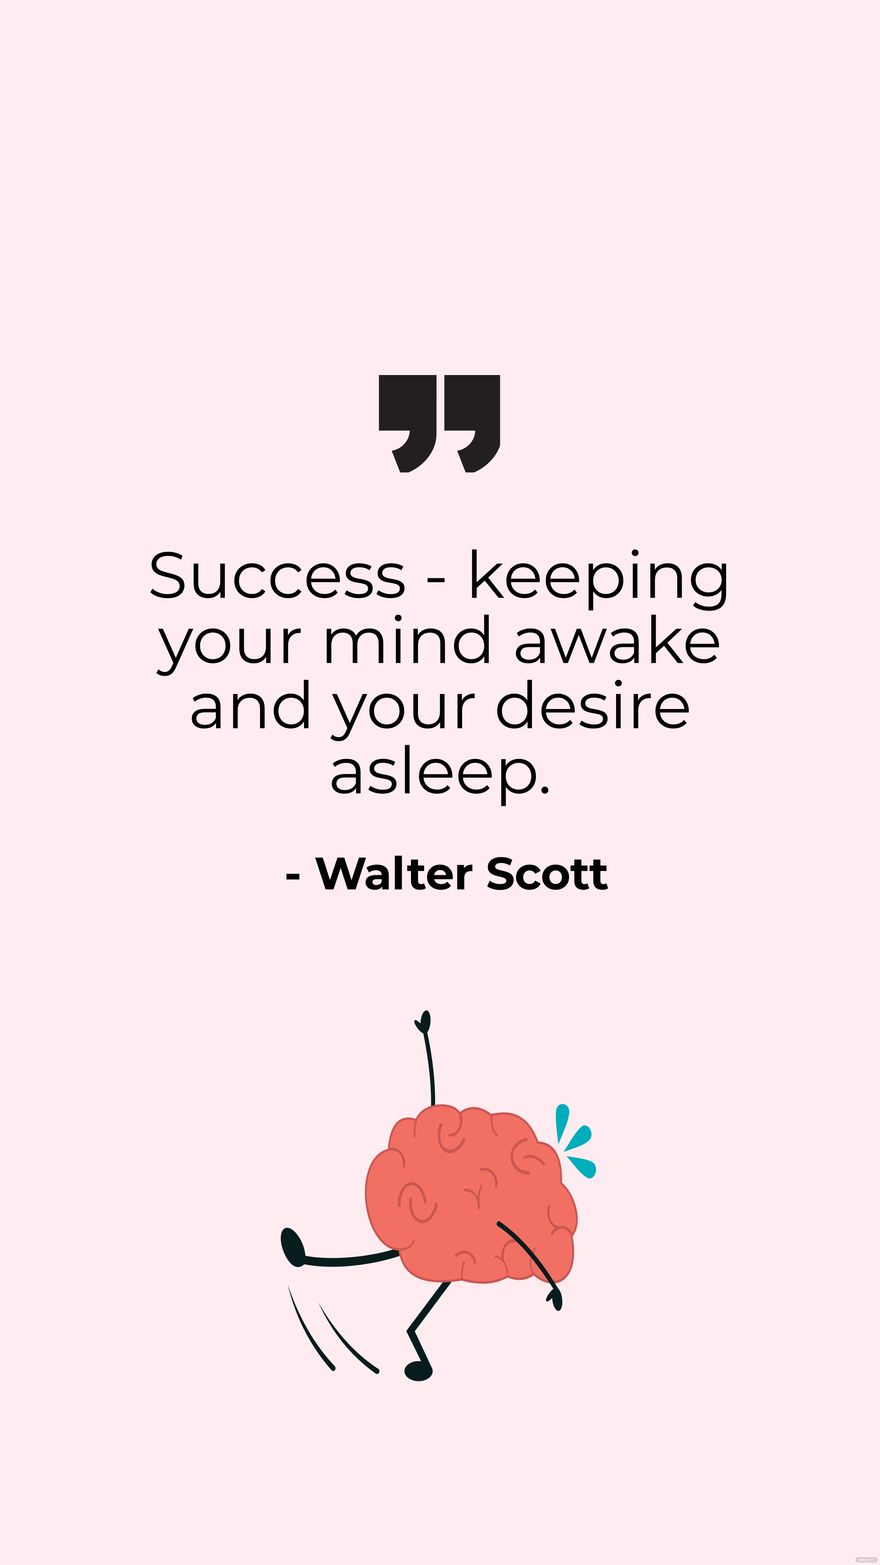 Free Walter Scott-Success - keeping your mind awake and your desire asleep.